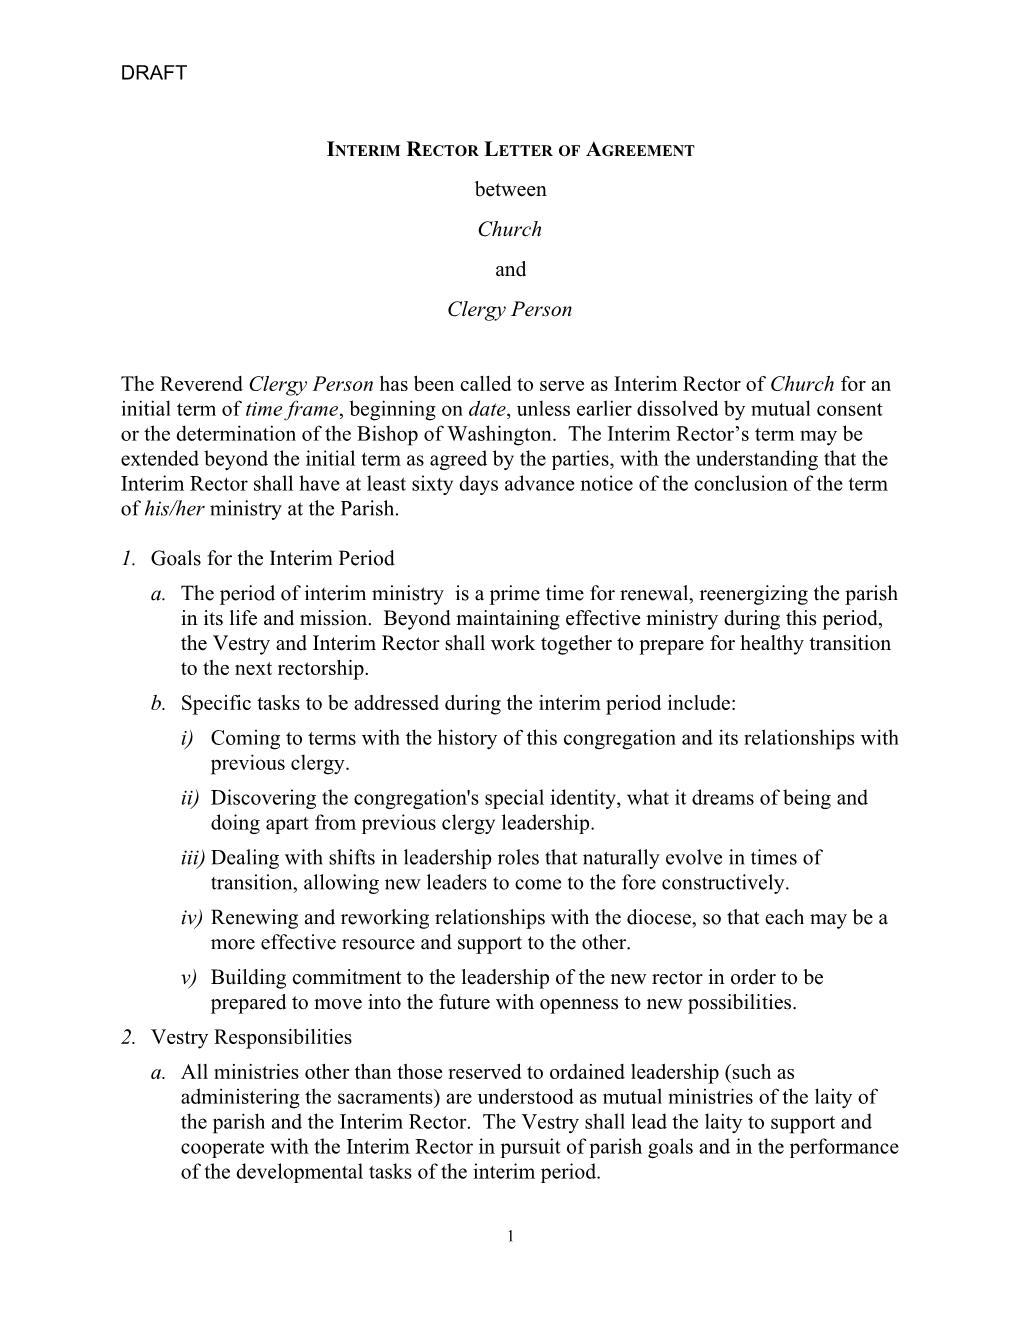 Appendix D: Interim Pastor Model Letter of Agreement